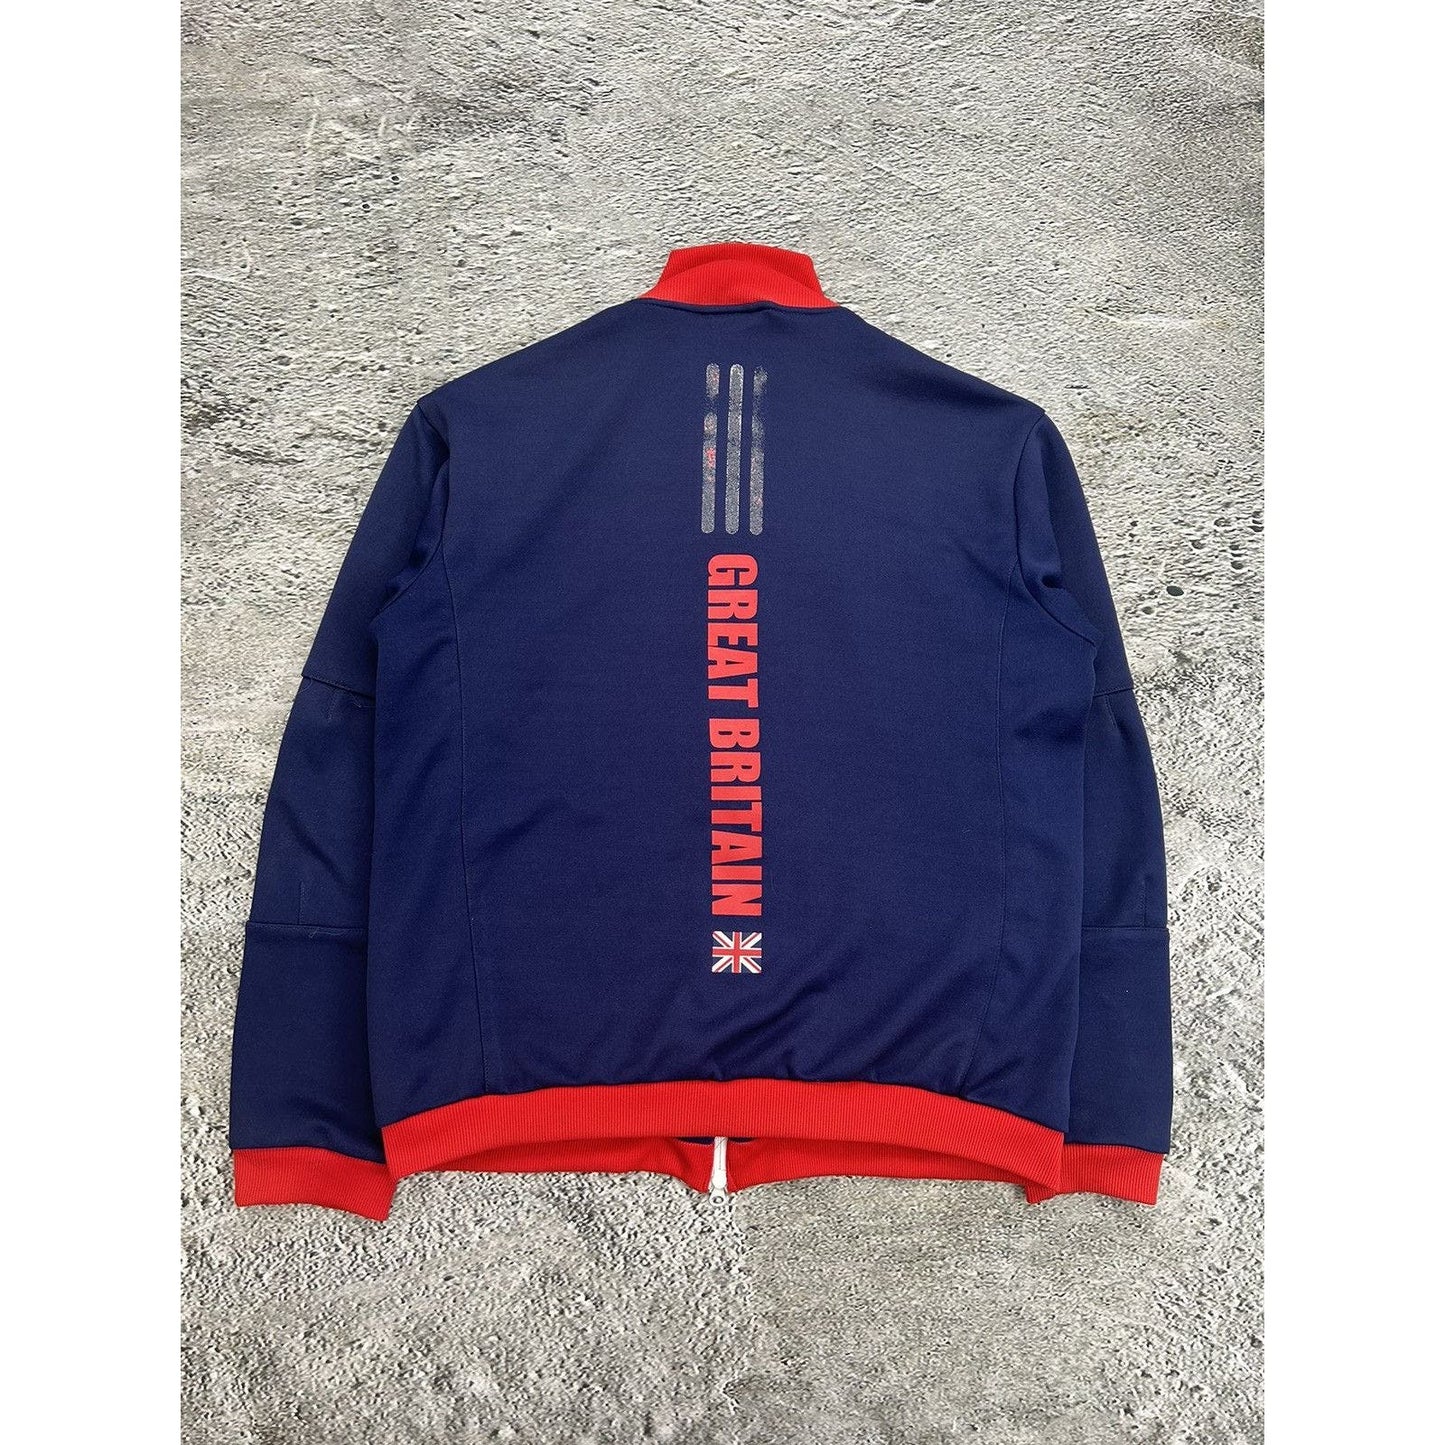 Adidas Great Britain zip sweatshirt navy track jacket